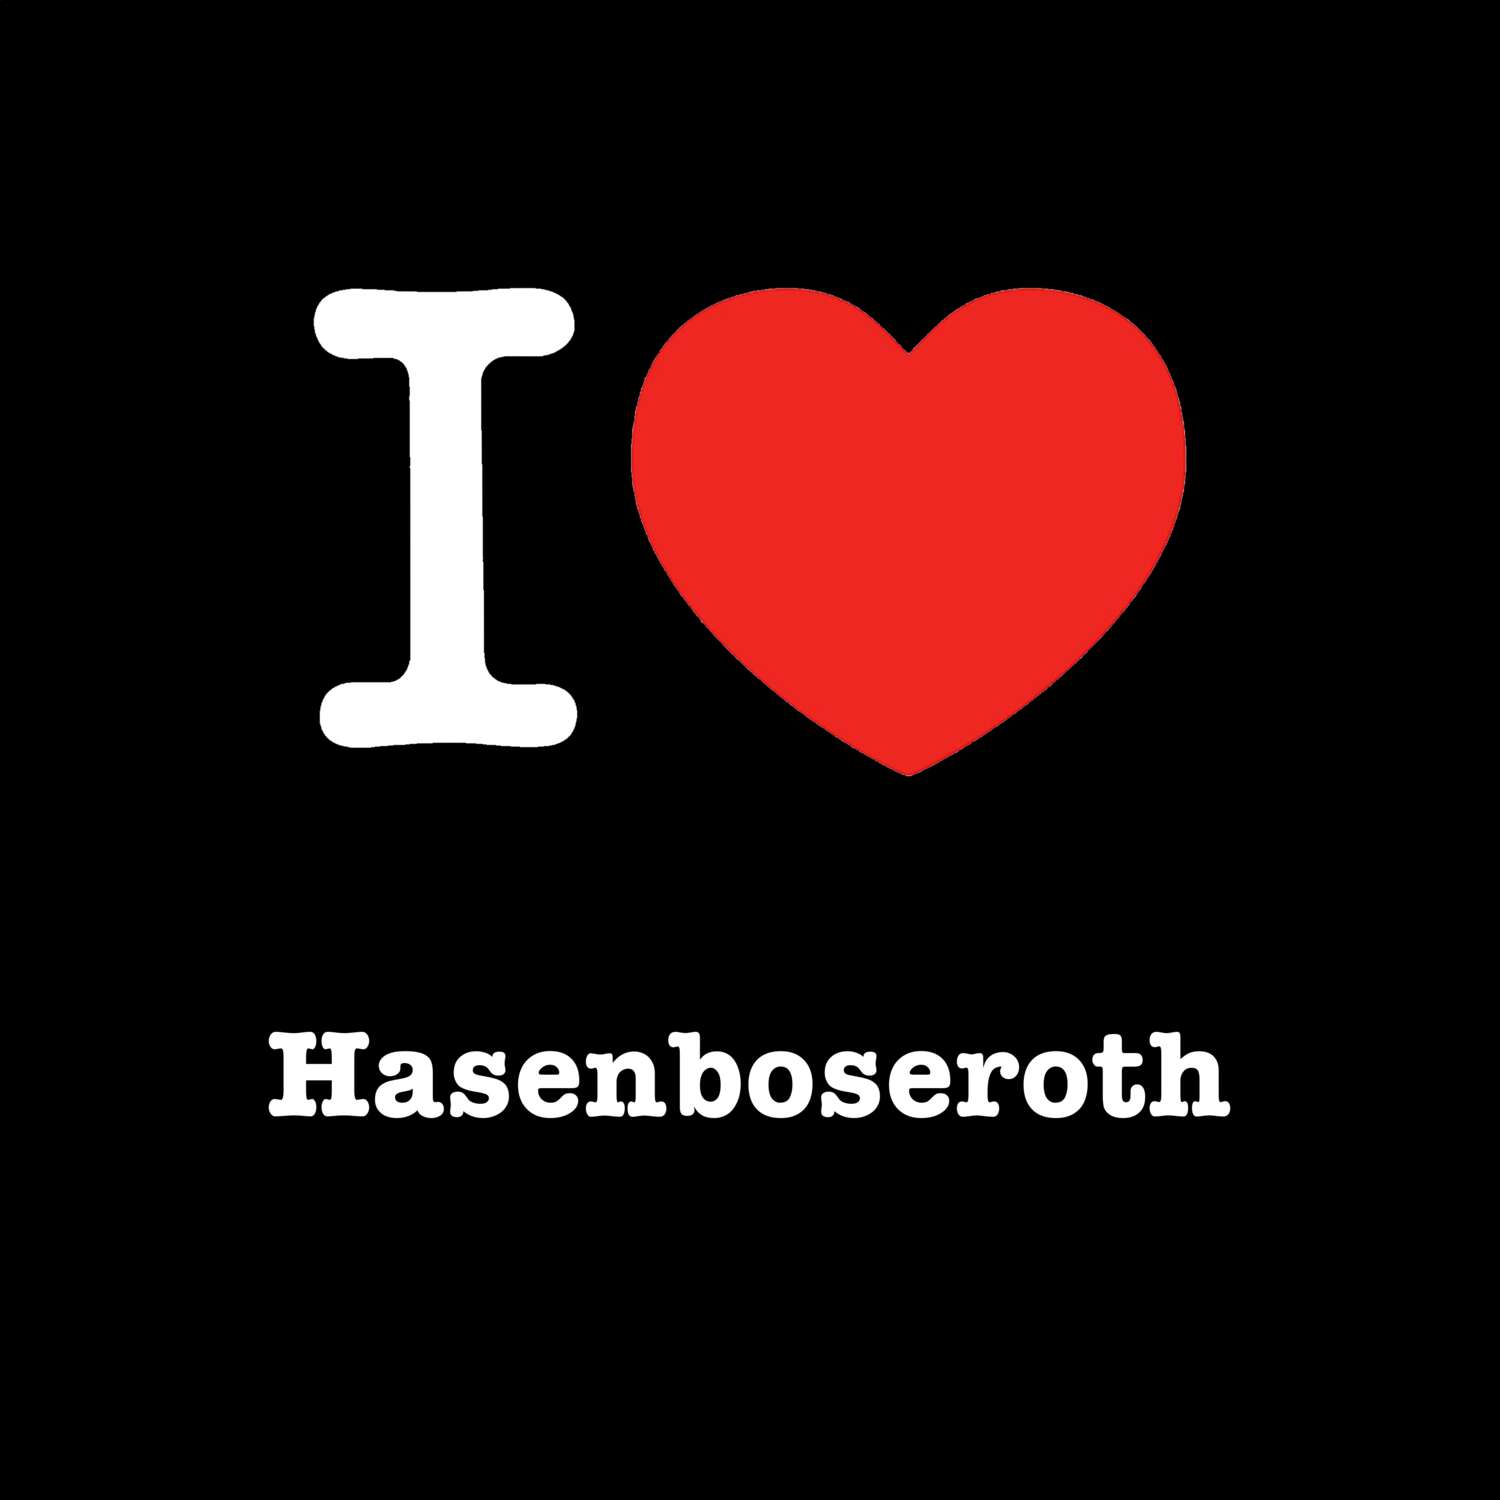 Hasenboseroth T-Shirt »I love«